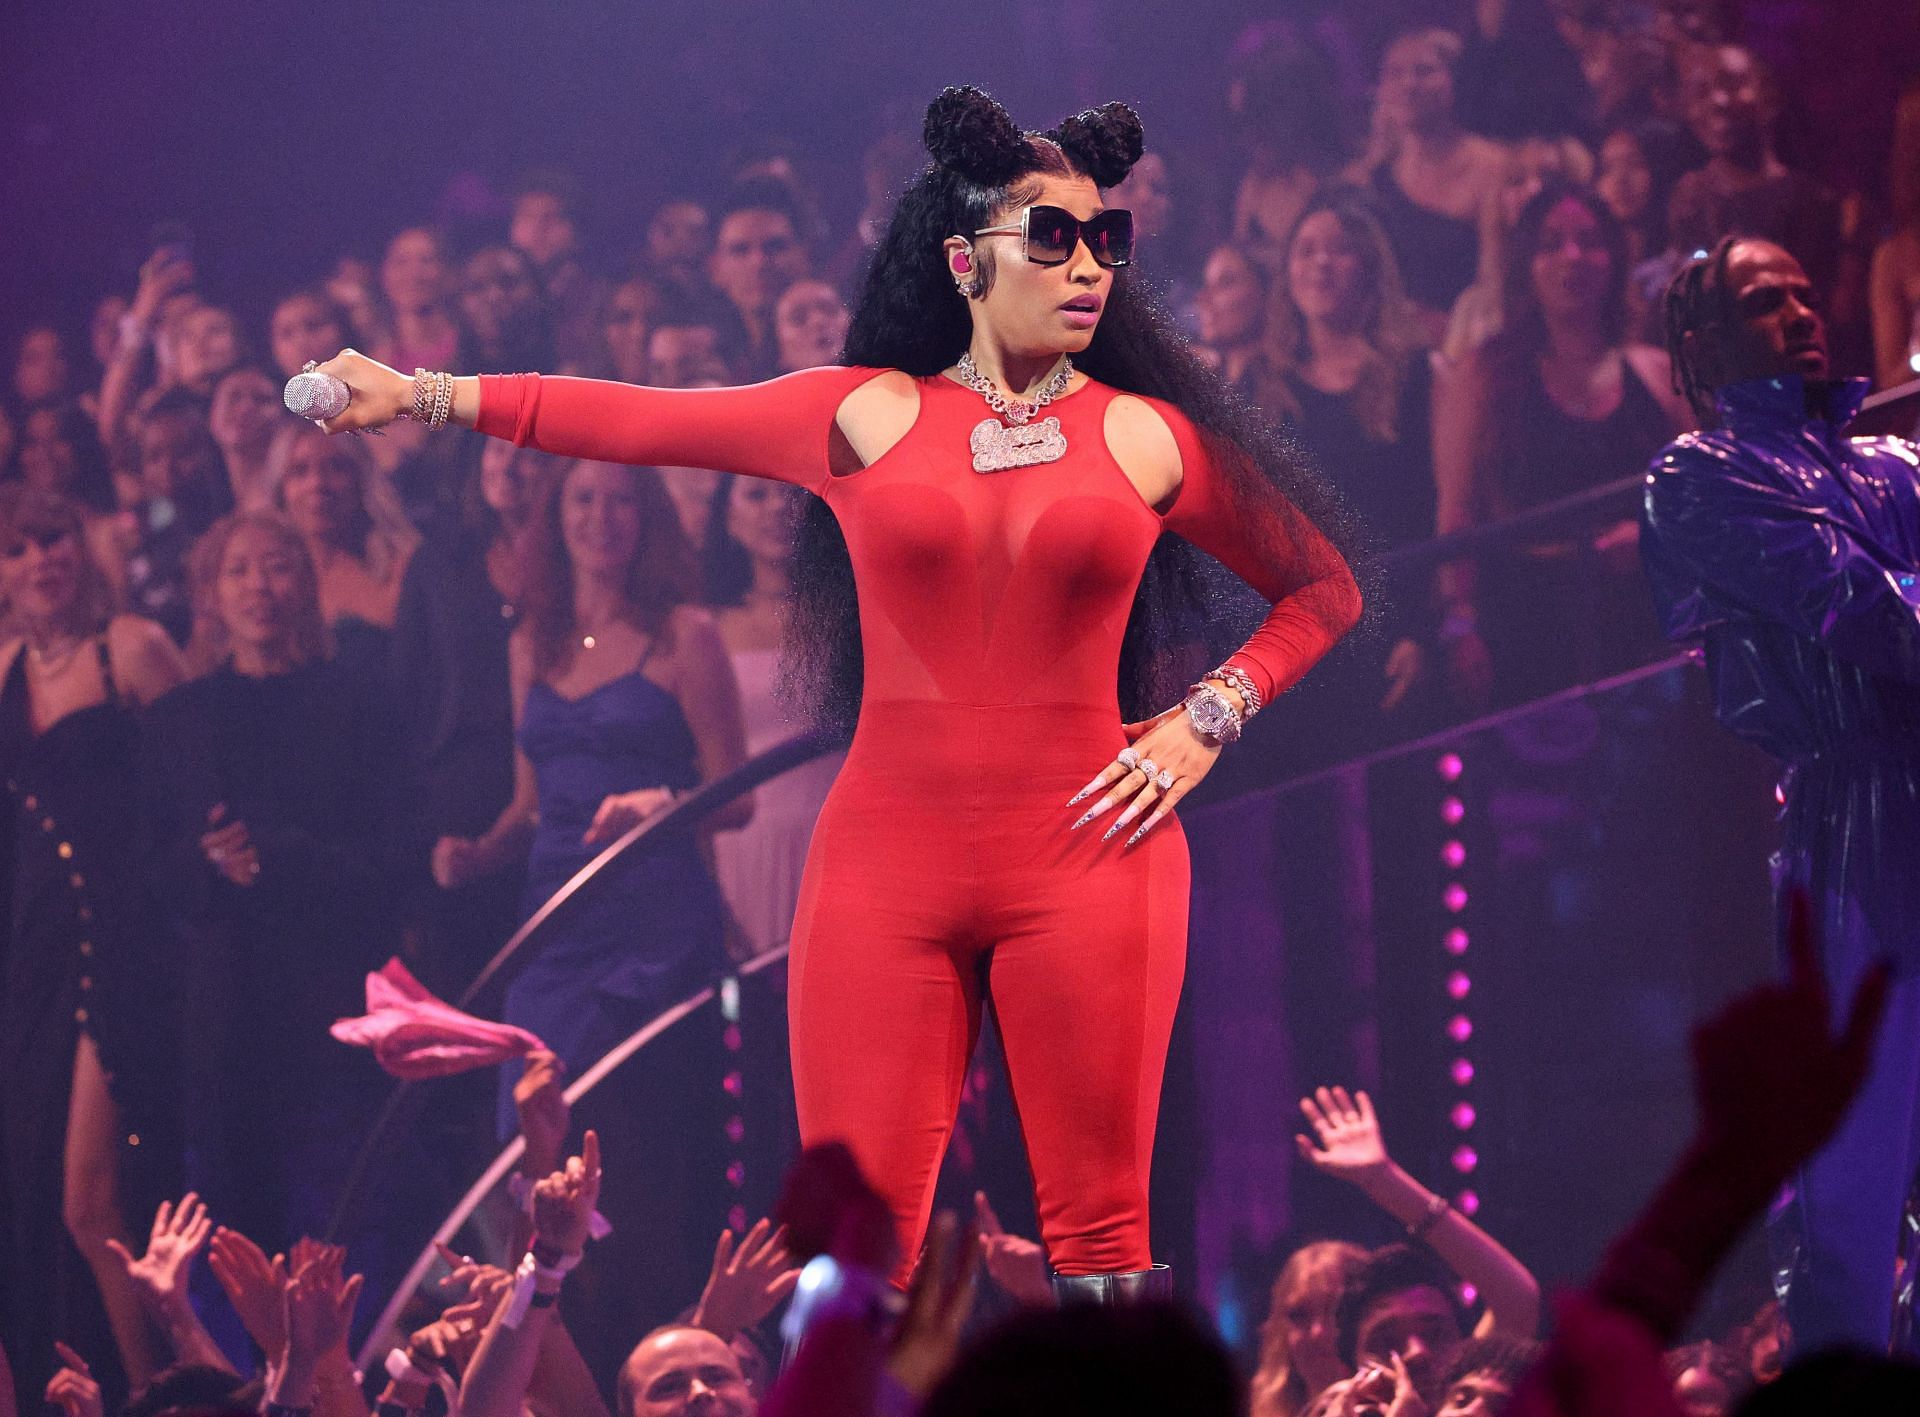 Nicki Minaj has captured the entire incident on her social media (Image via Getty)